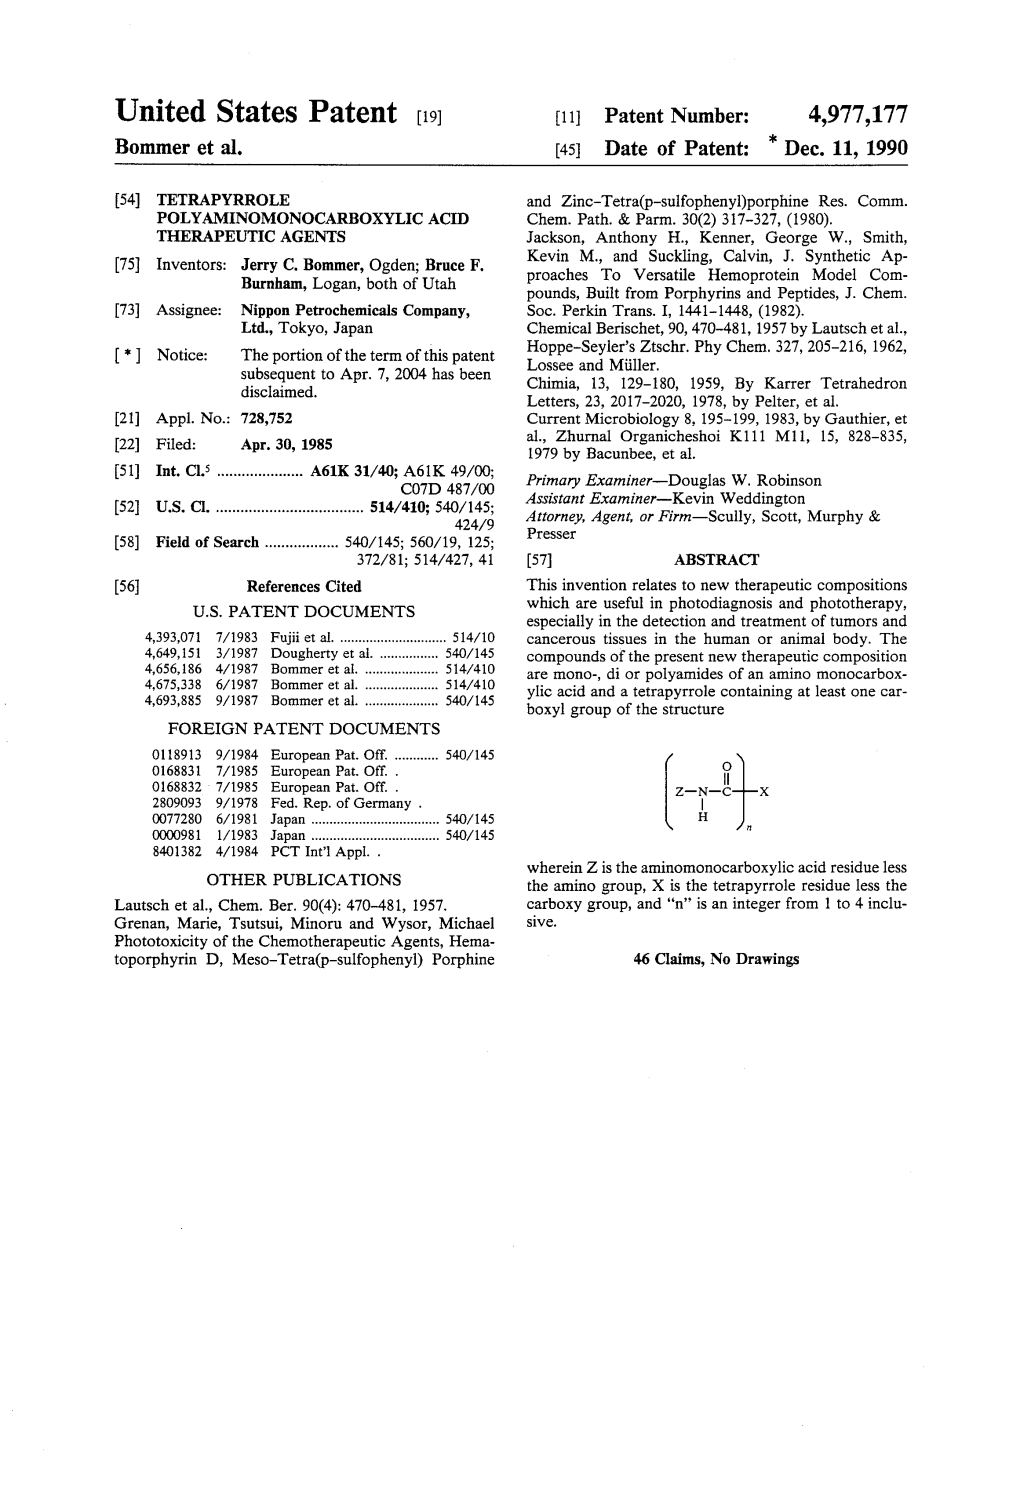 United States Patent (19) 11 Patent Number: 4,977,177 Bommer Et Al